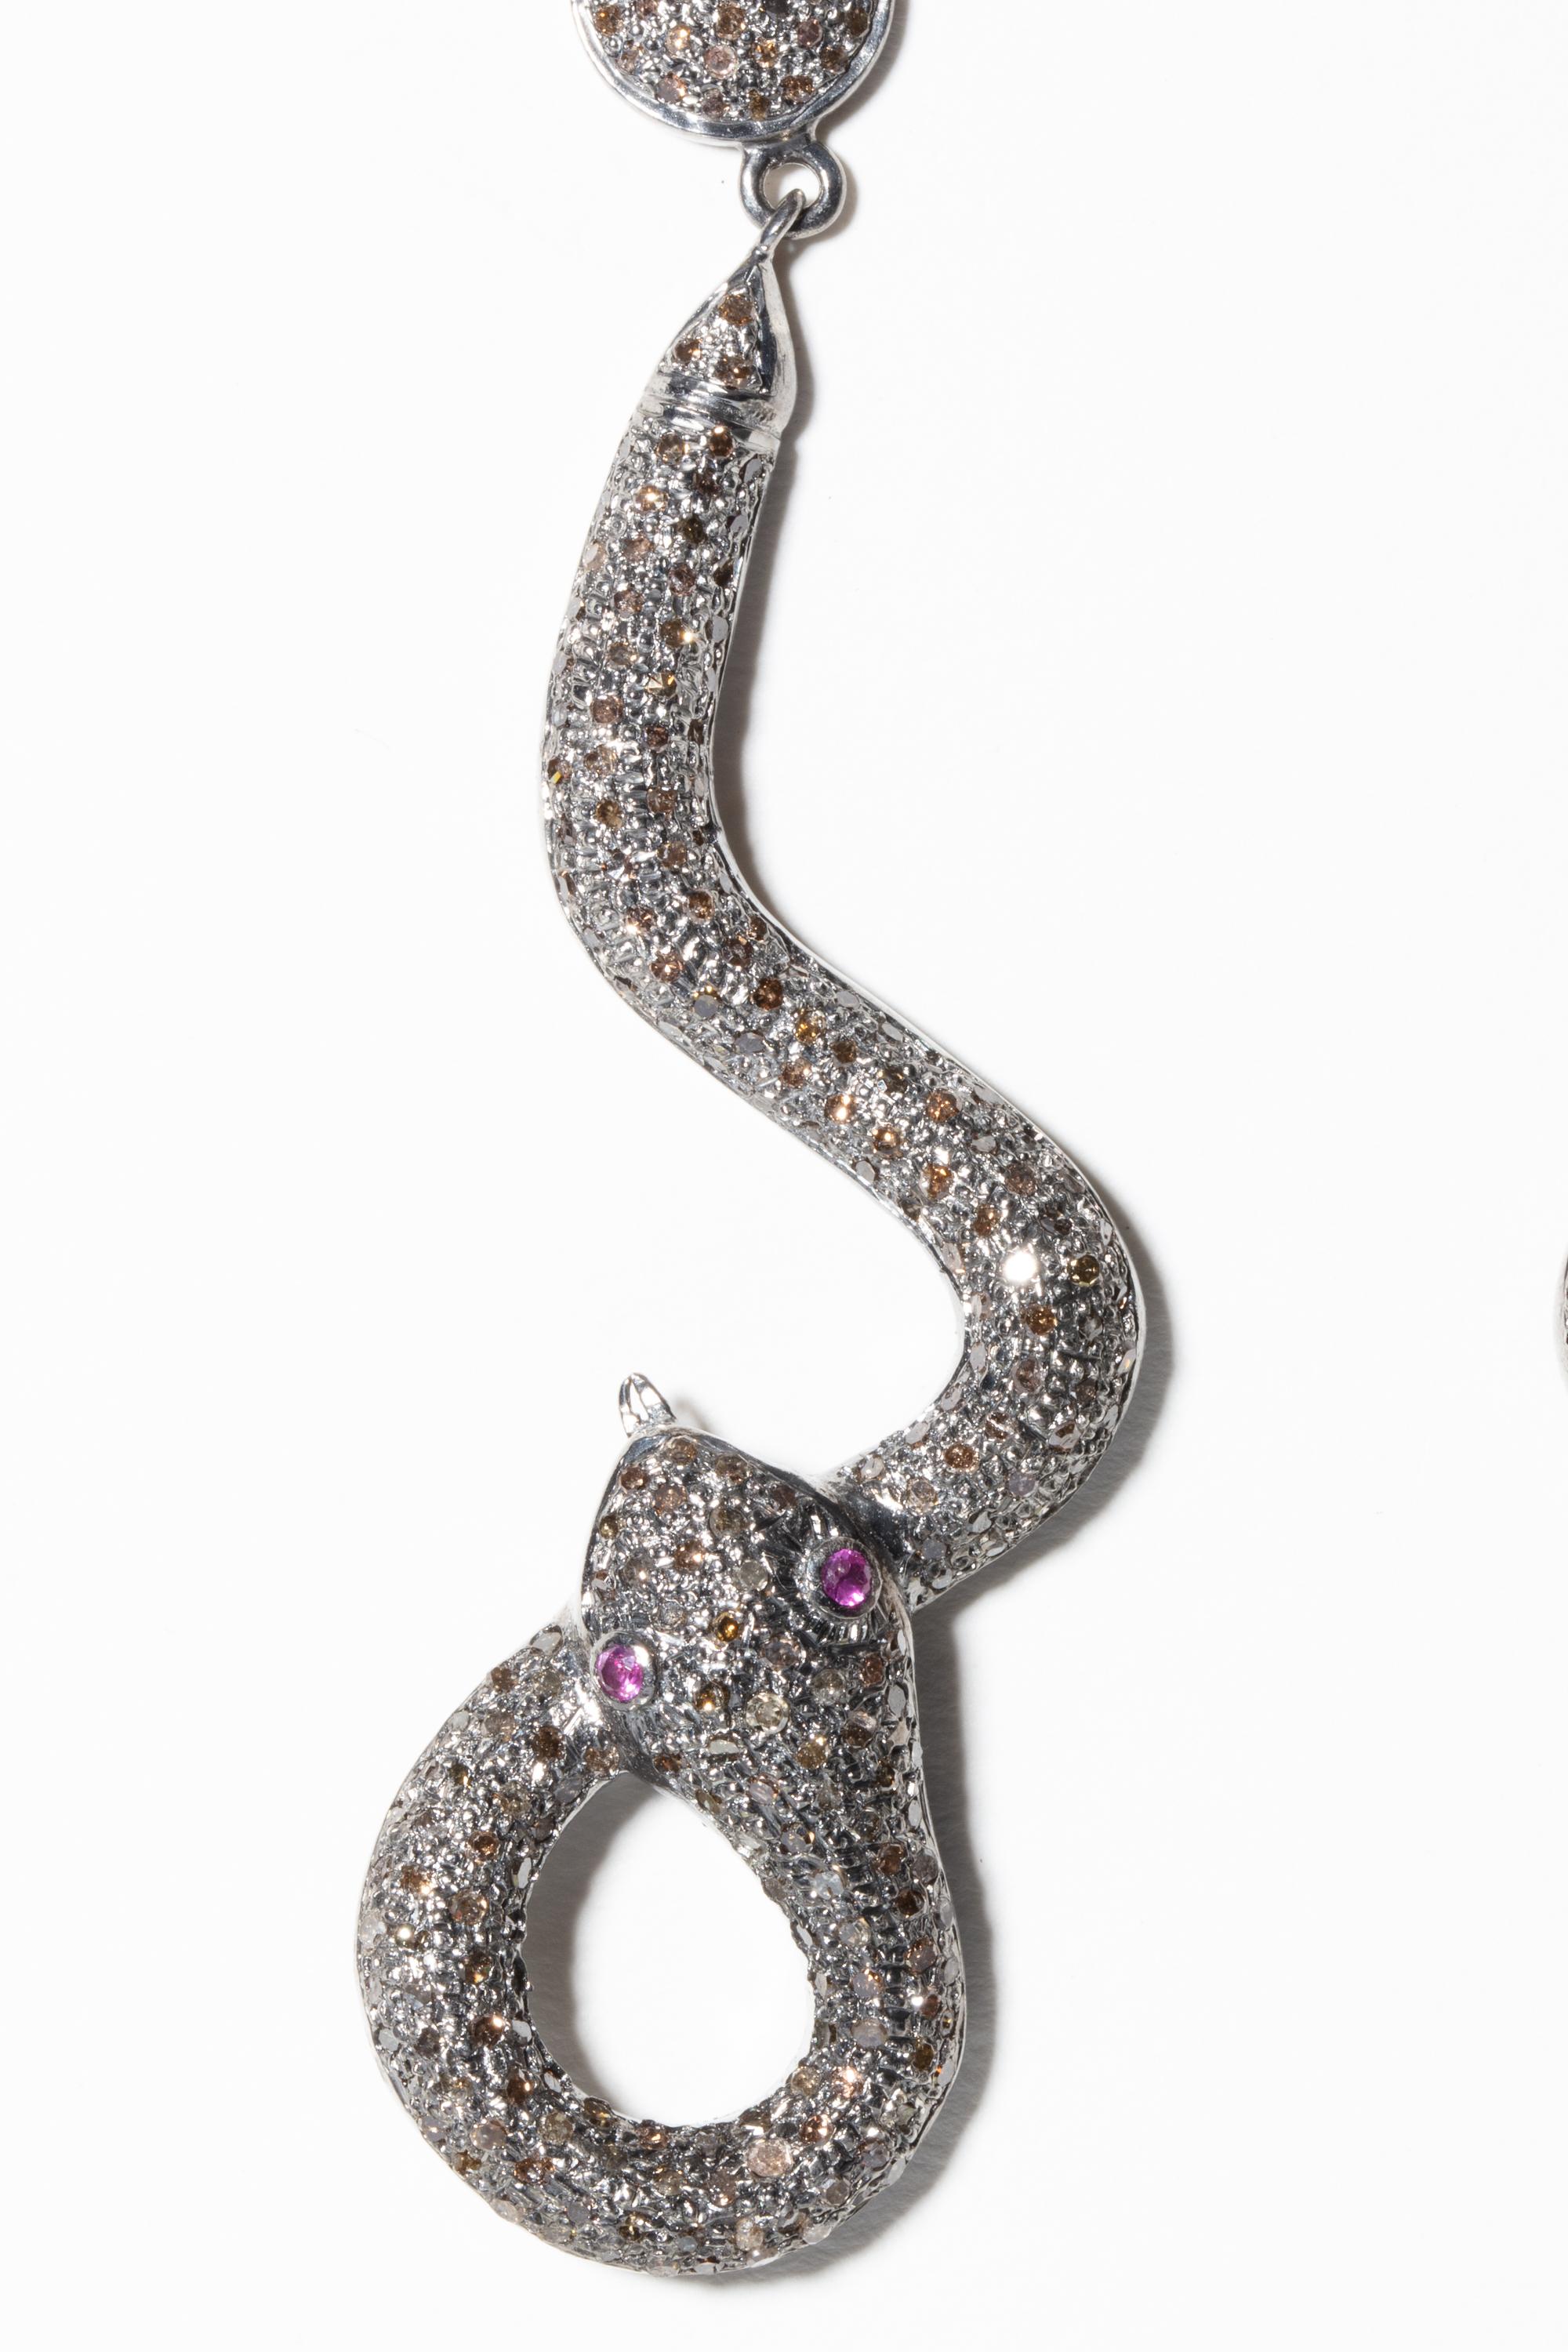 Pave Set Diamond Snake Dangle Earrings with Ruby Eyes 1